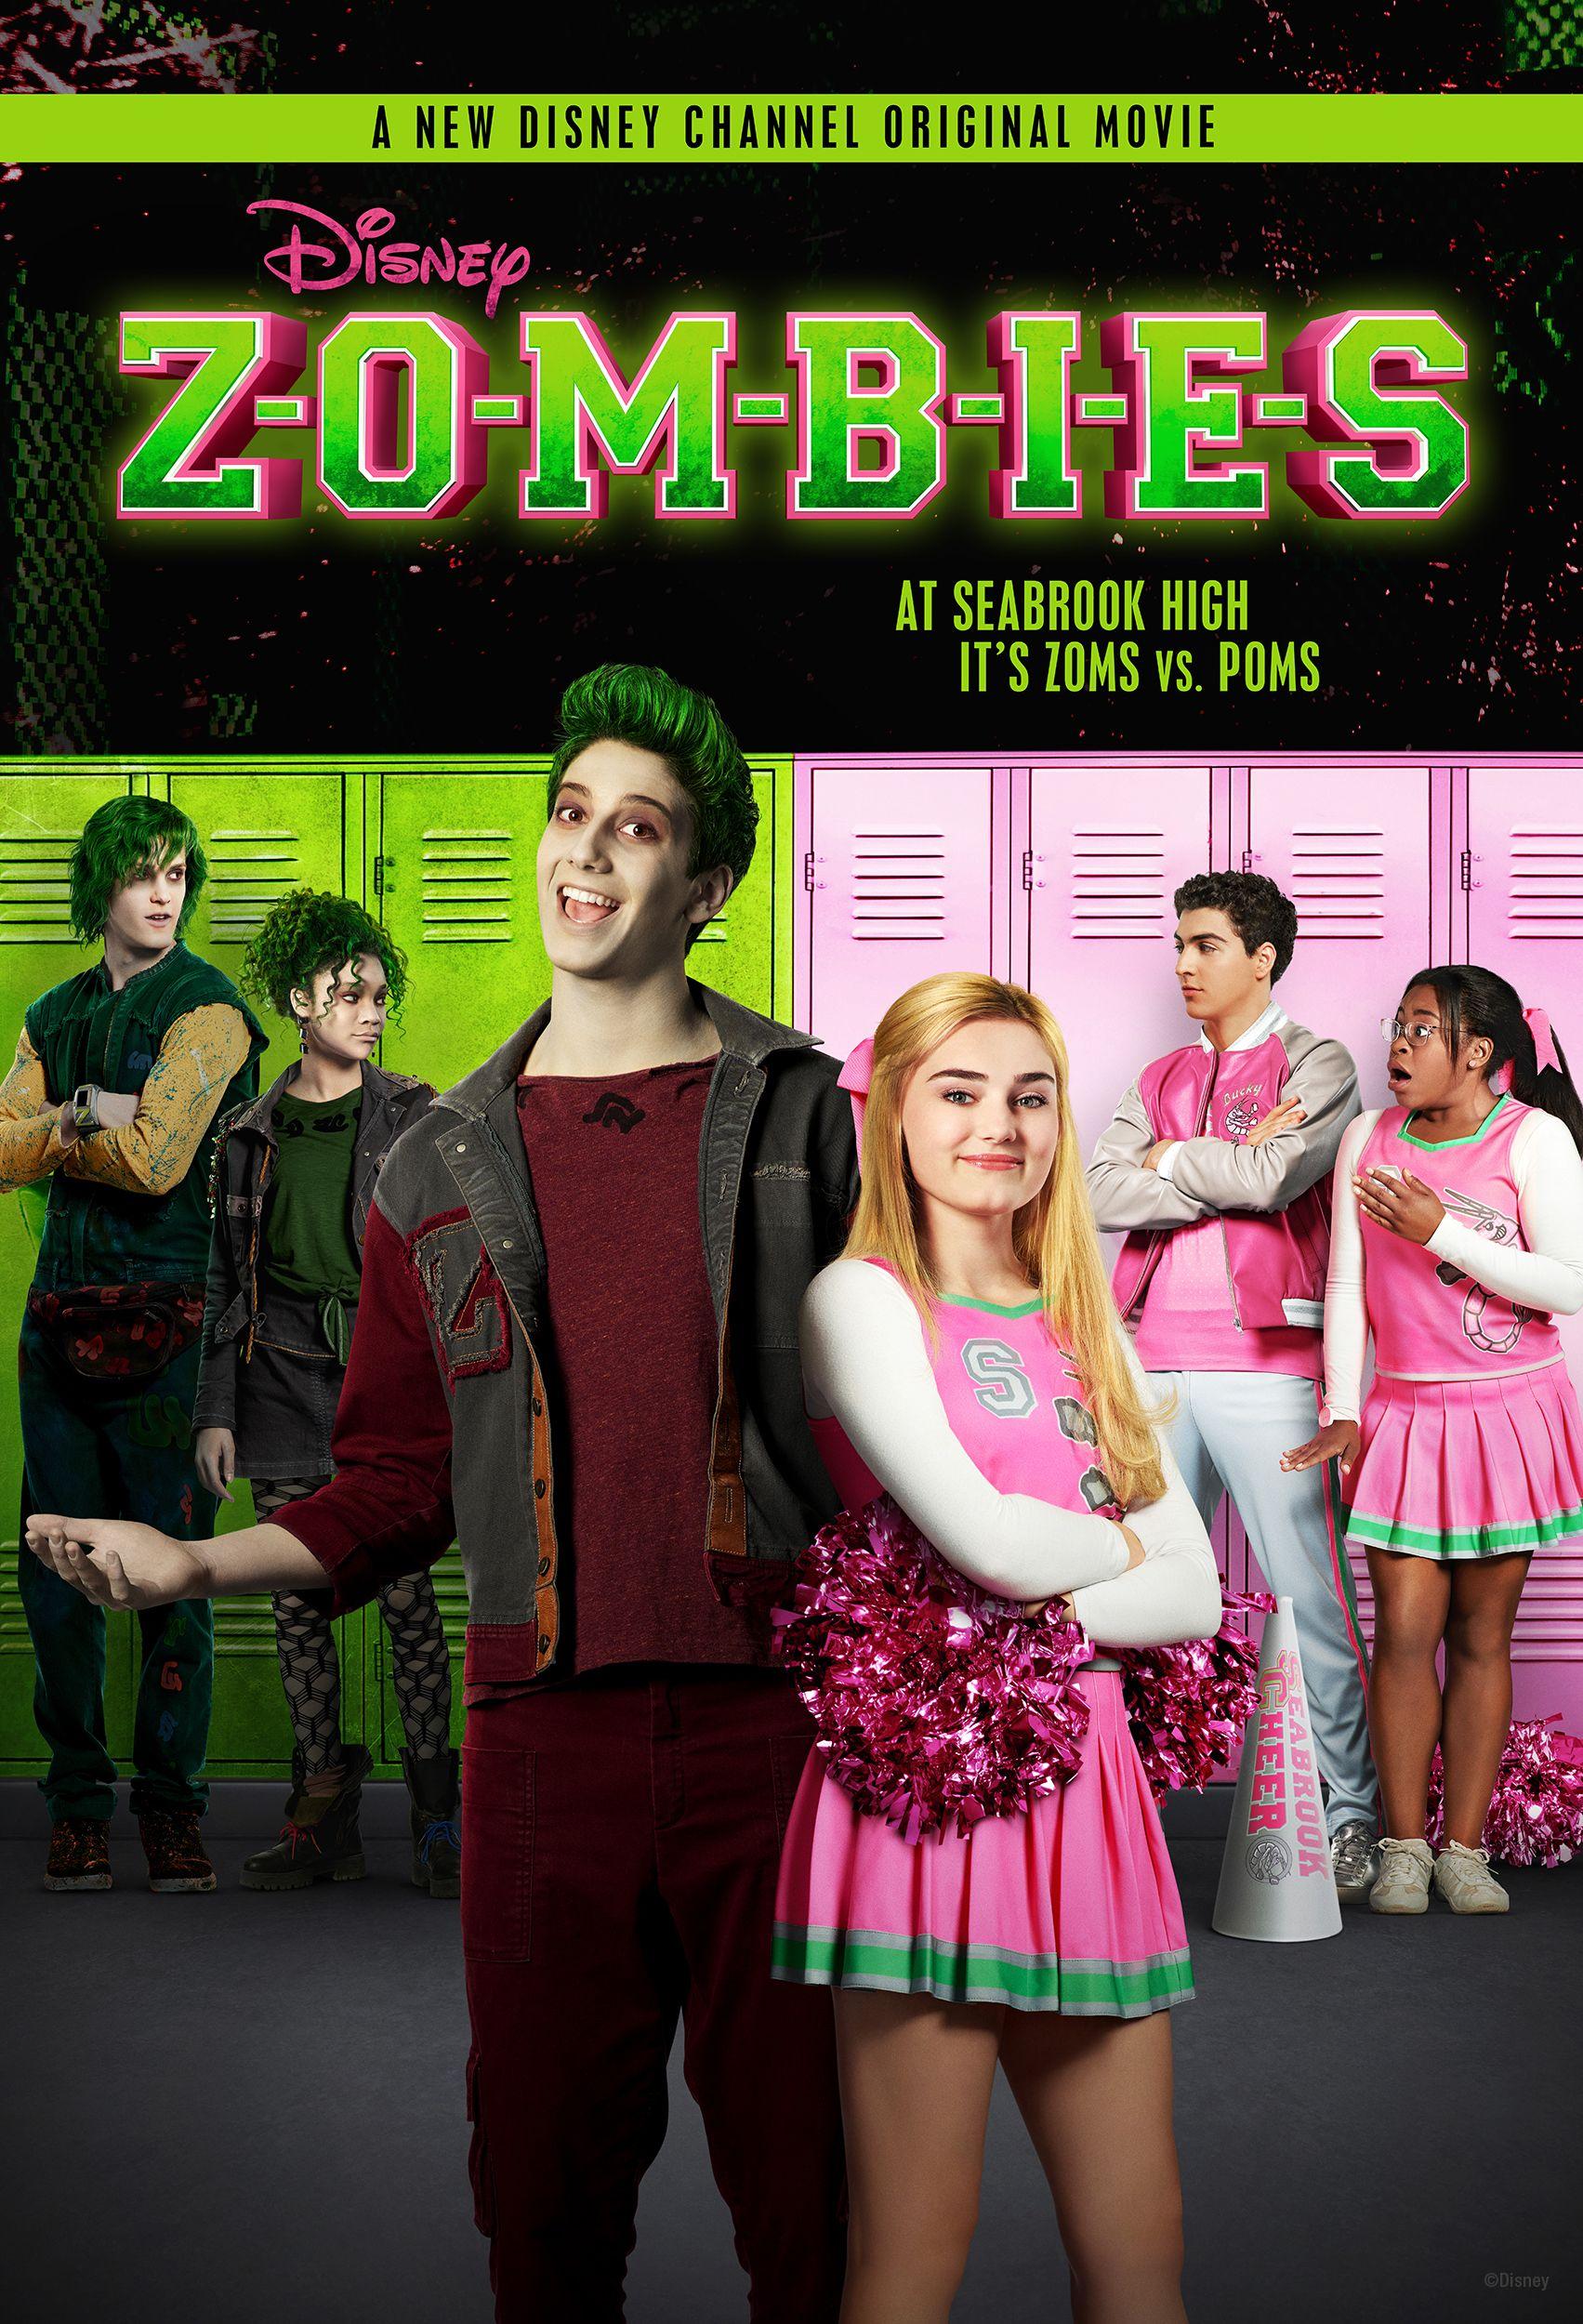 Disney Channel original movie 'Zombies' to unite cheerleaders